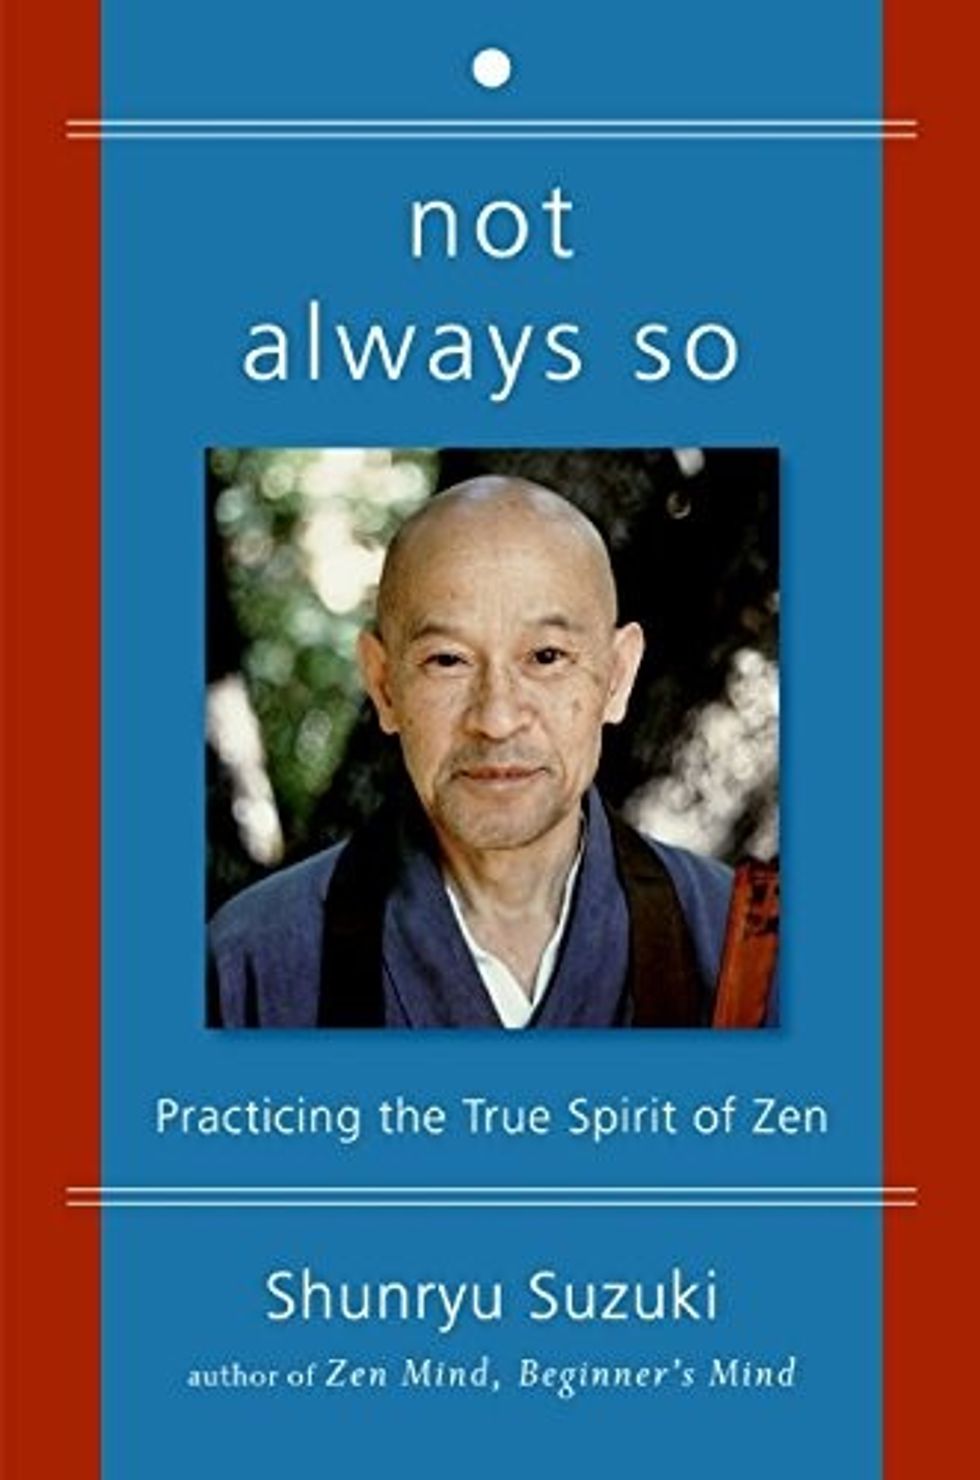 Not-Always-So-meditation-book-Shunryu-Suzuki